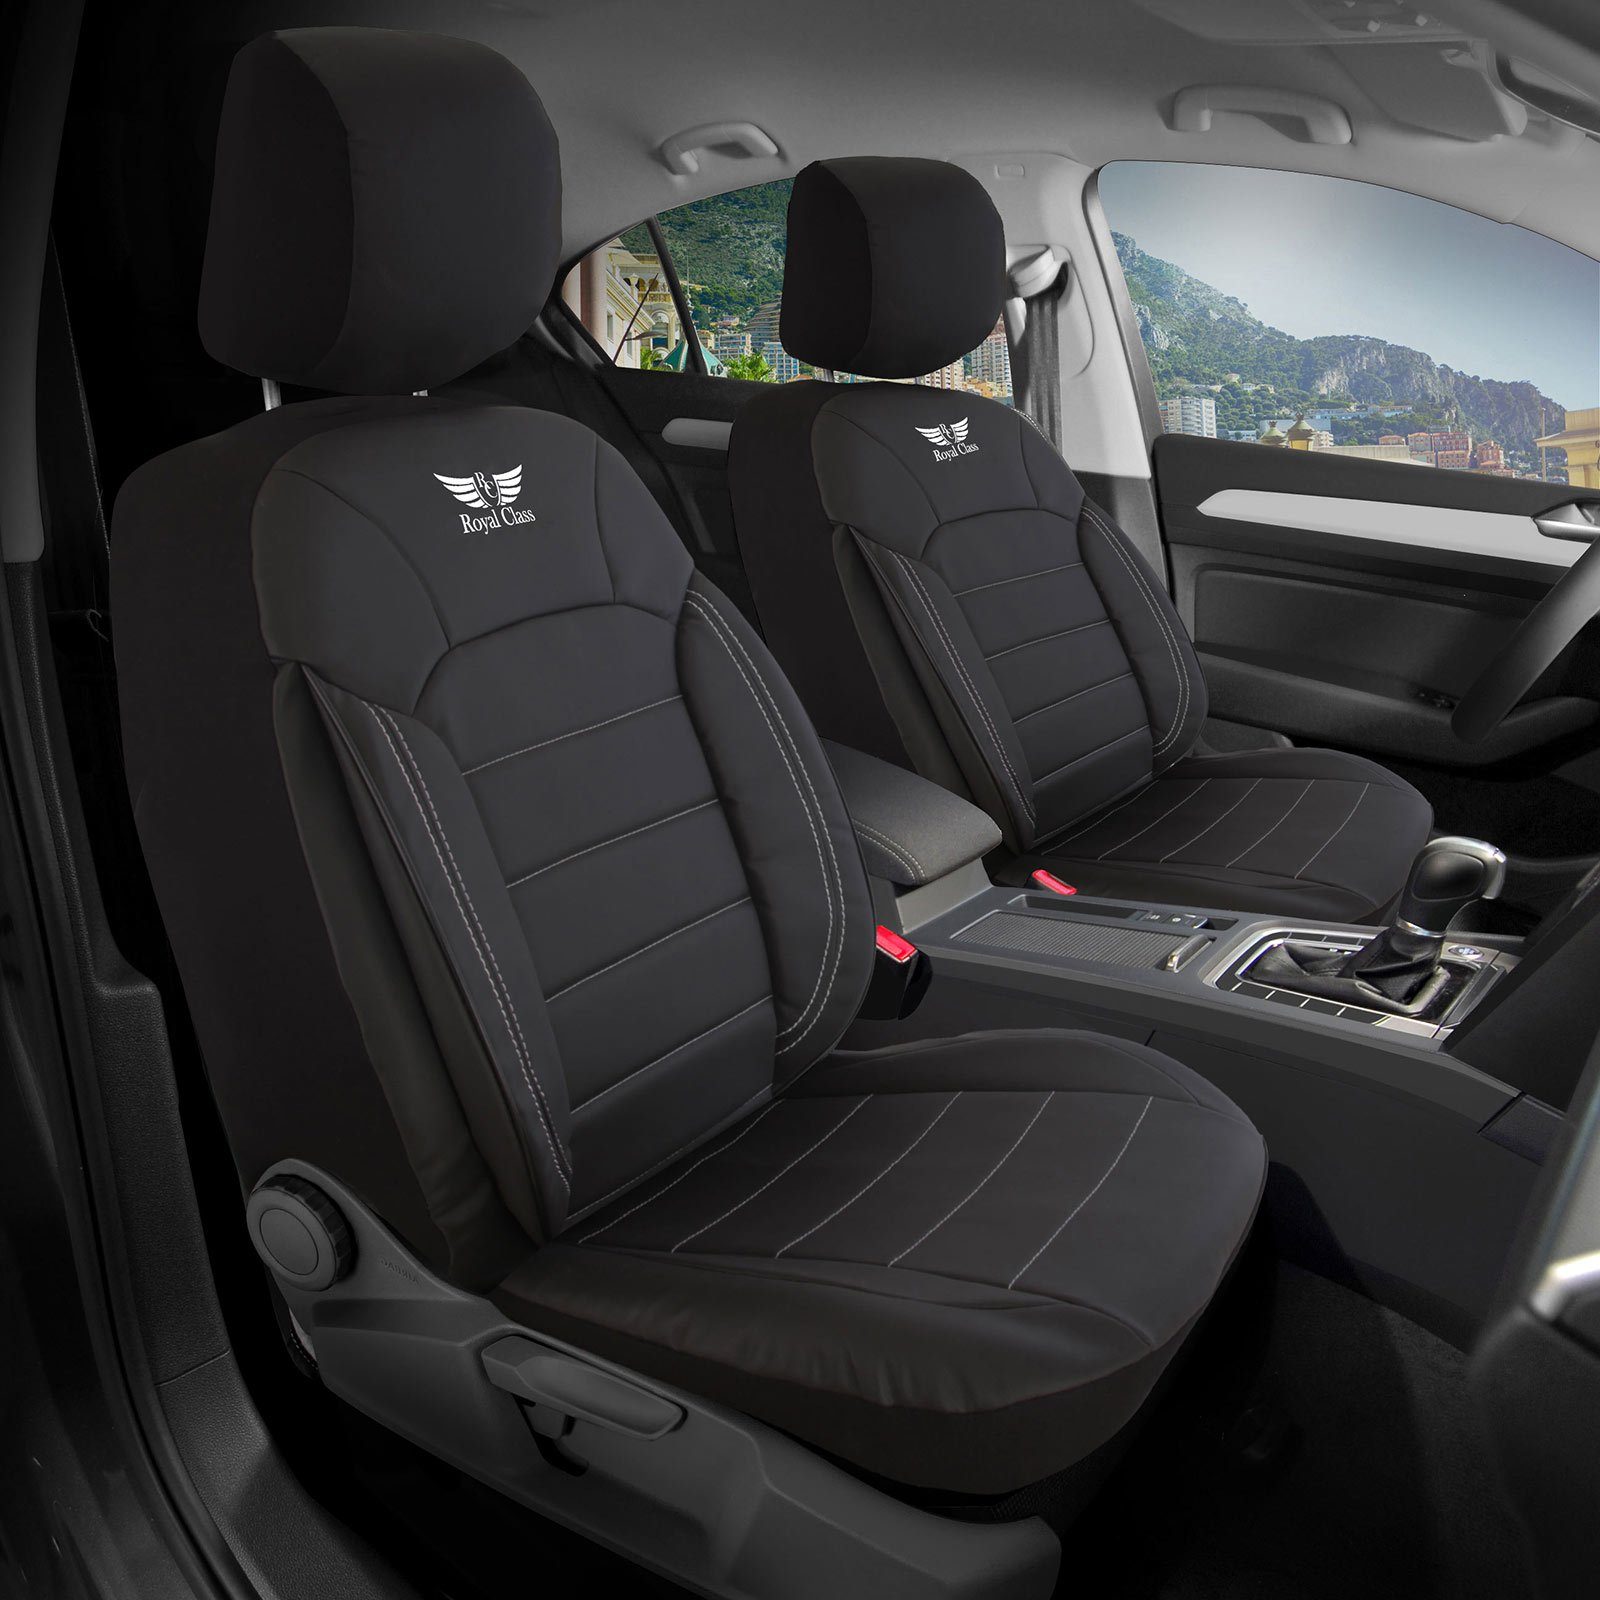 Set A1 Audi Sitzbezüge (Schwarz-Weiß), RoyalClass® passend Autositzbezug für für